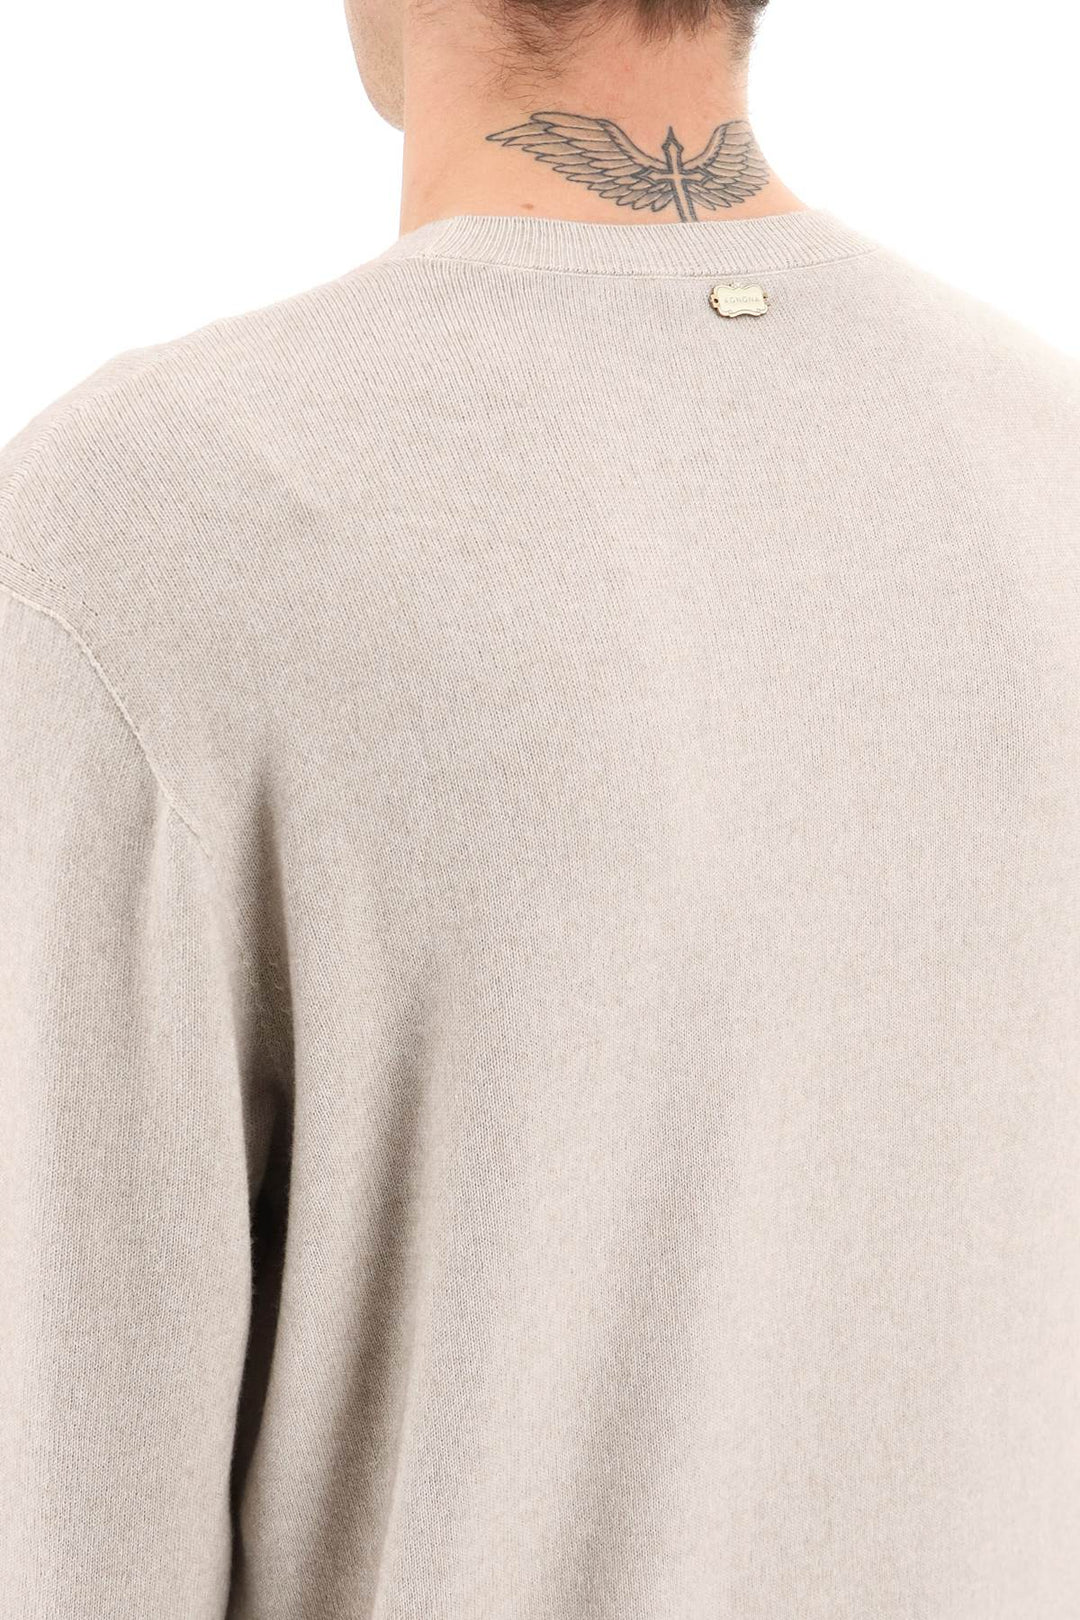 Agnona cotton and cashmere sweater-3